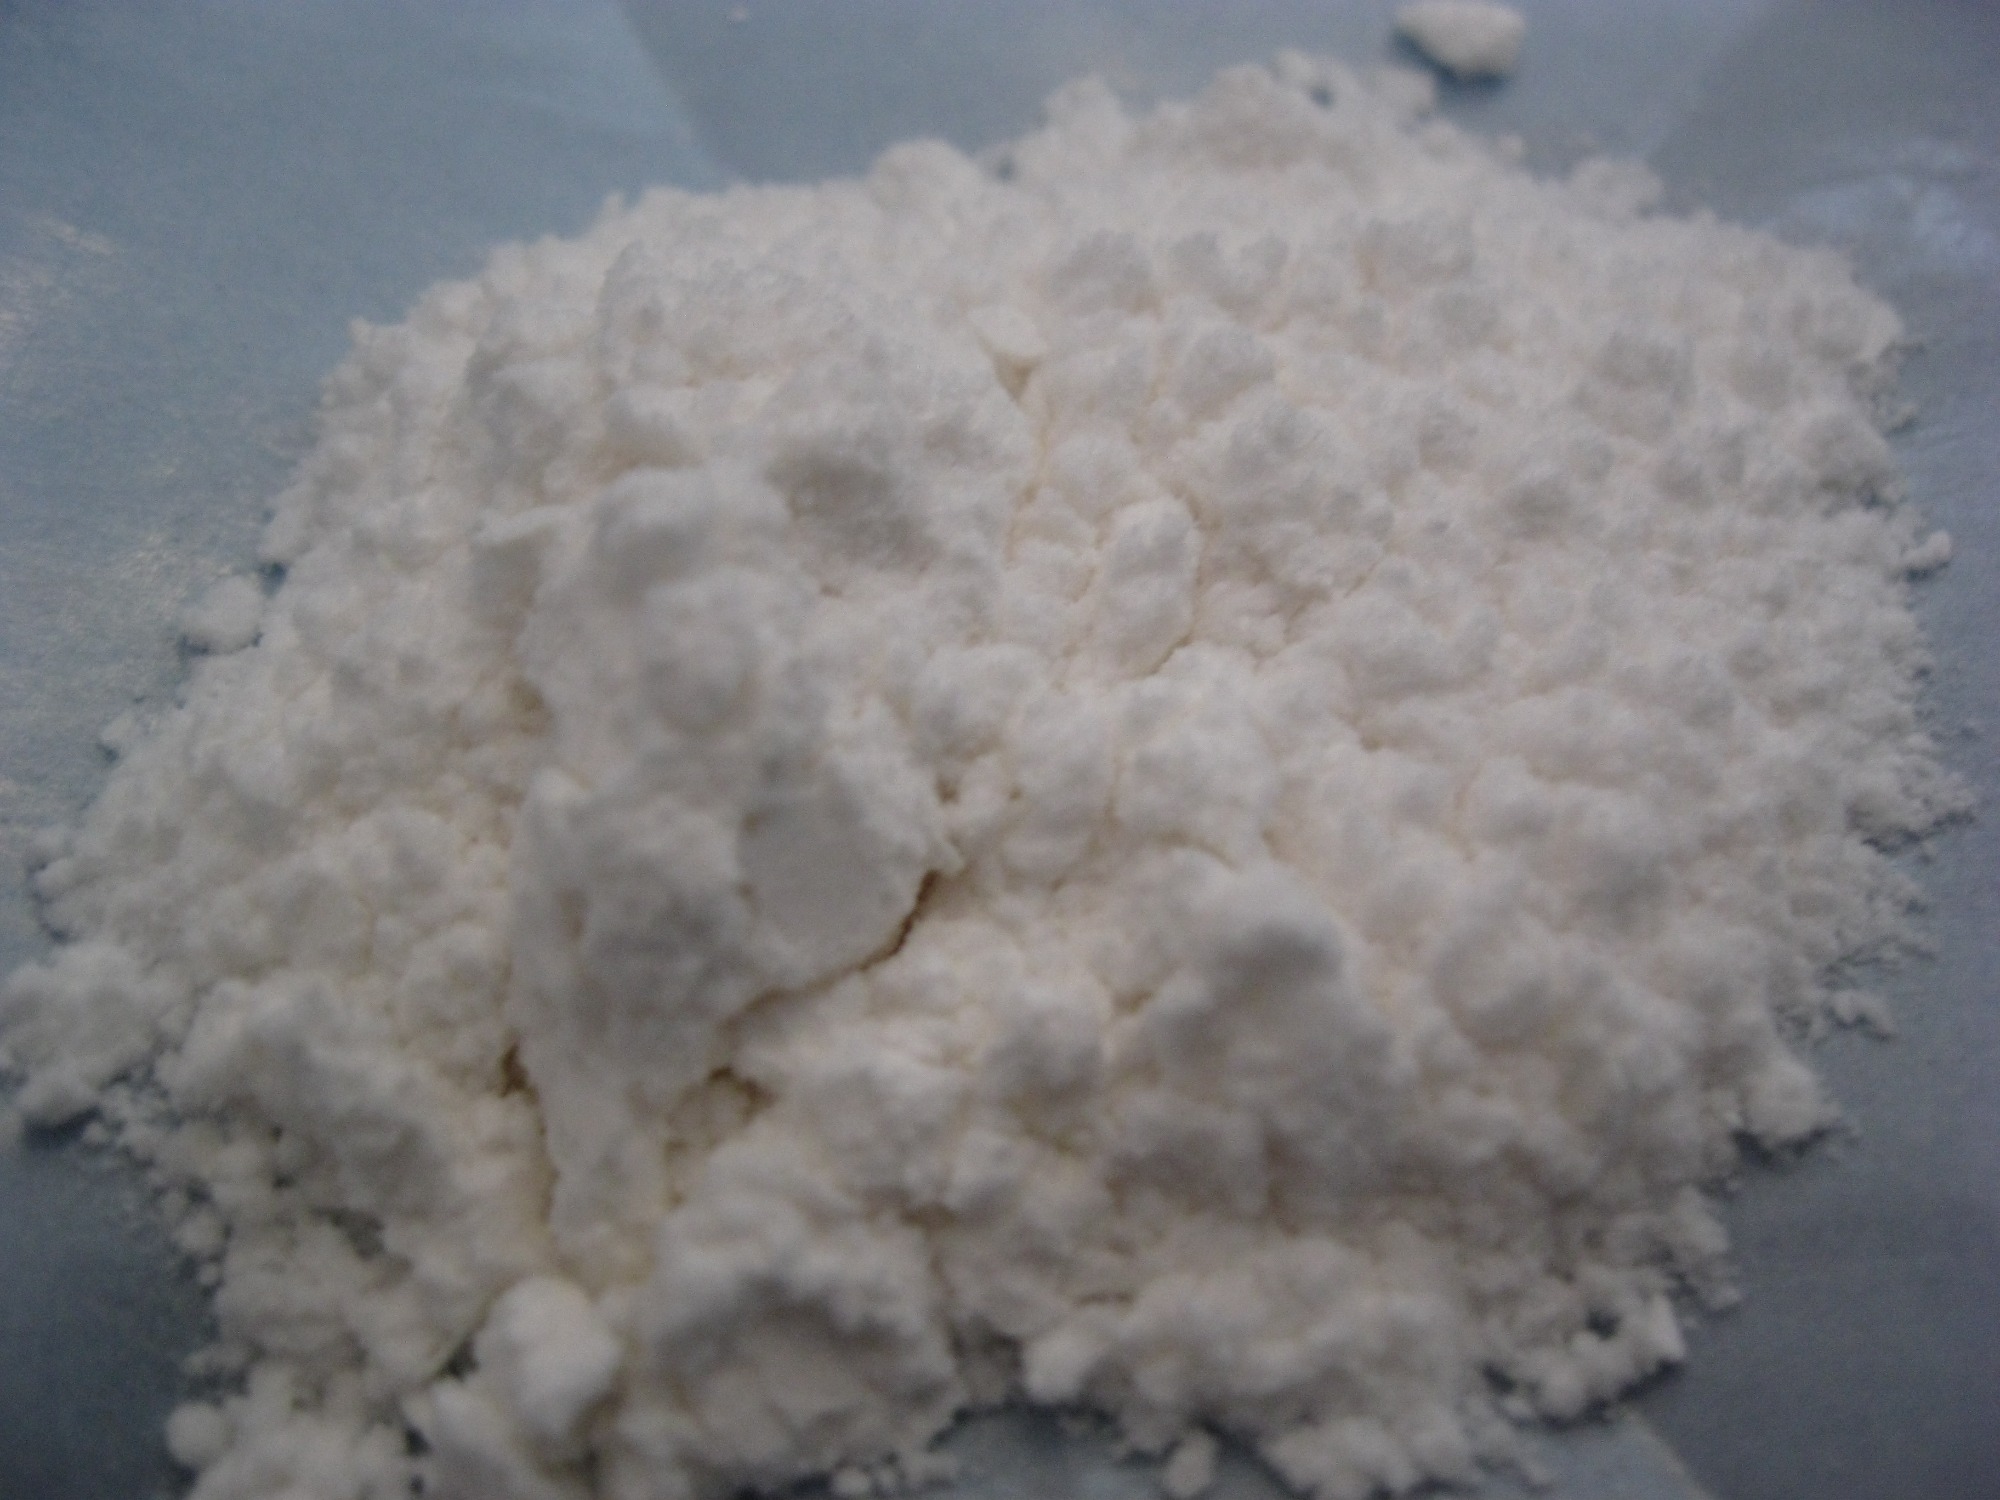 Supply 4,4'-Bis(methoxycarbonly)-2,2'-bipyridine CAS 71071-46-0 with best price